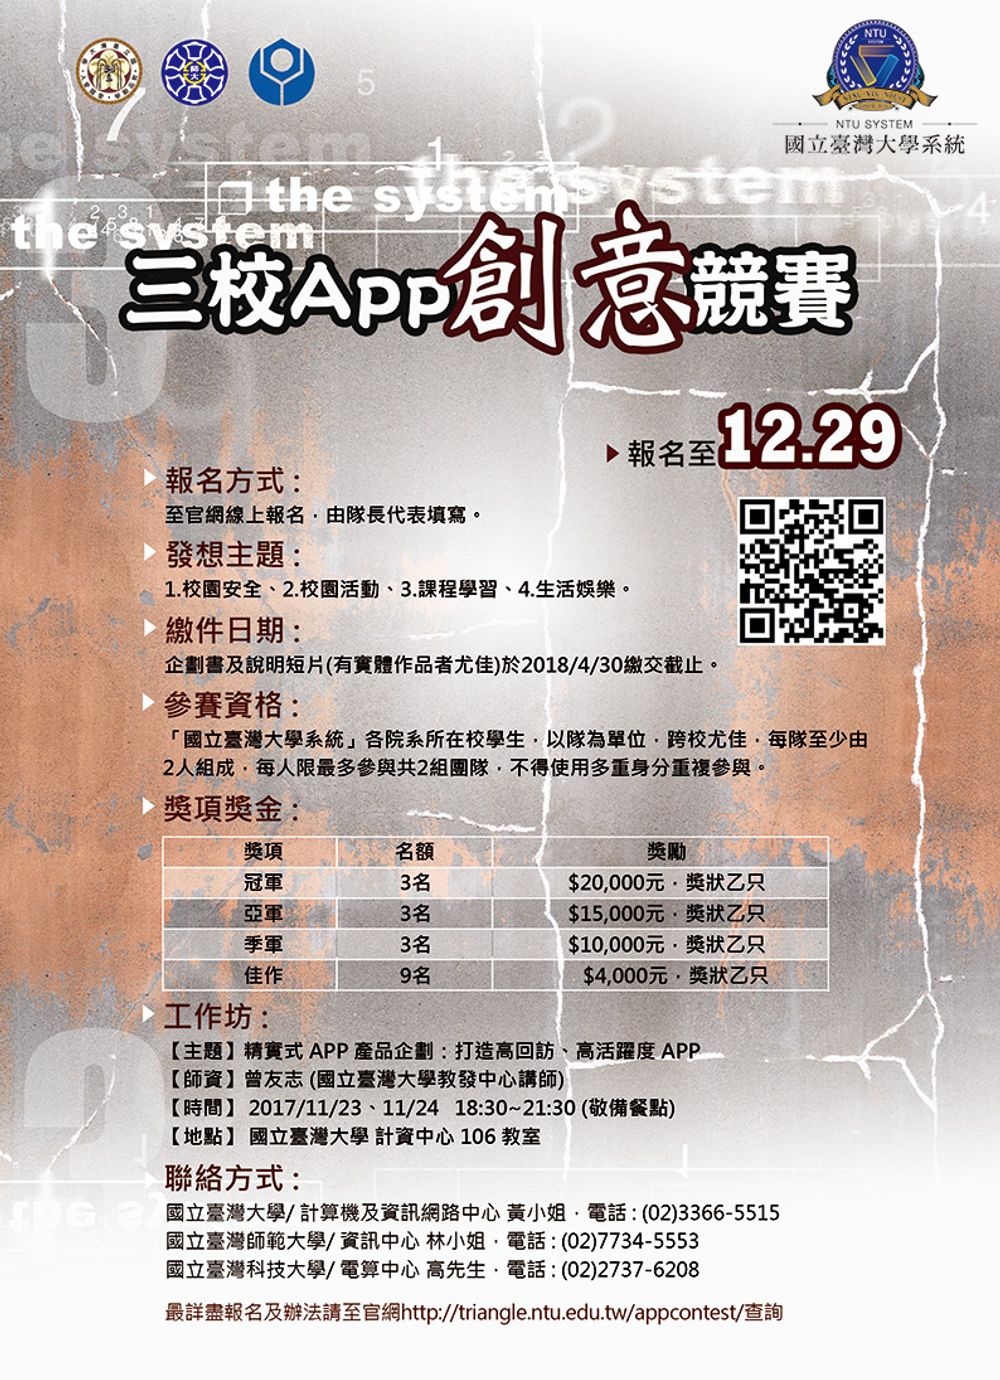 NTU System Student App Competition: register before December 29.